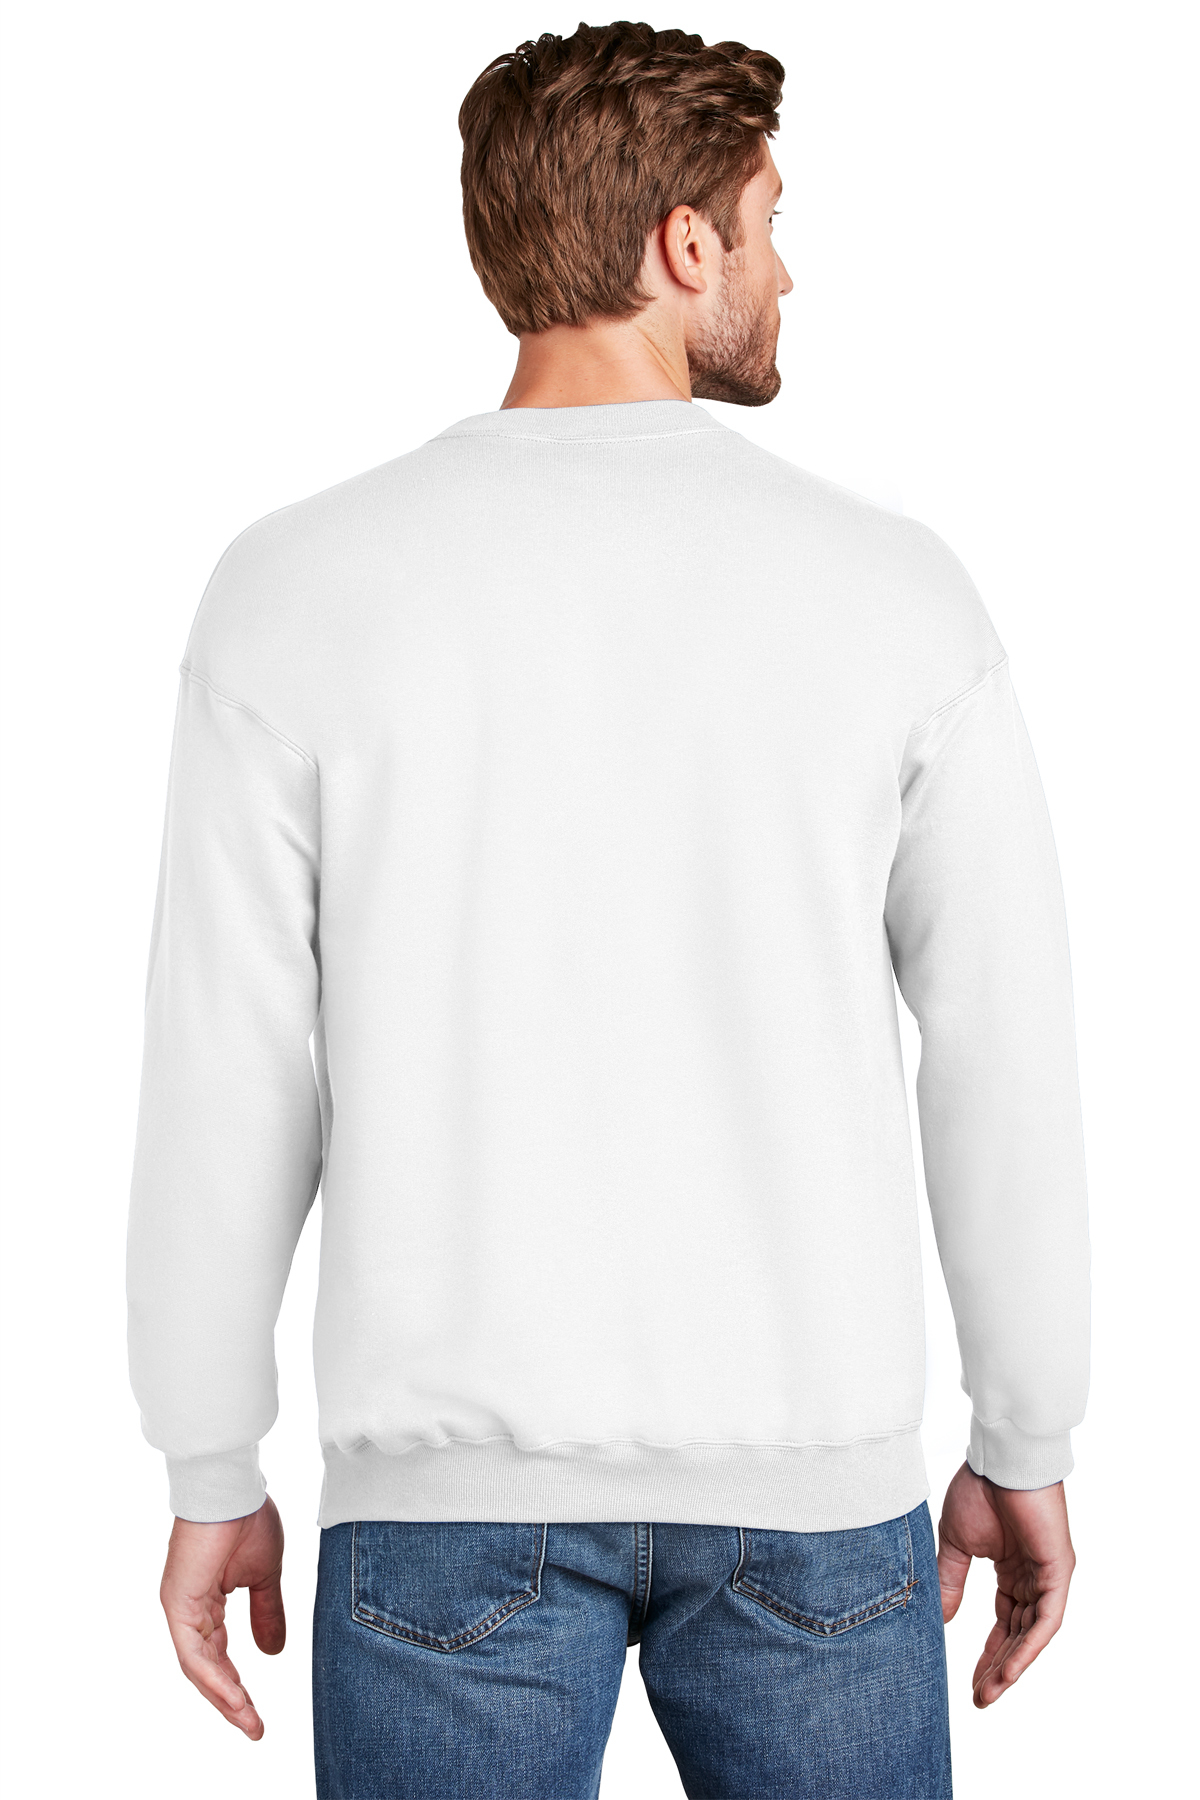 Hanes Ultimate Cotton - Crewneck Sweatshirt | Product | SanMar